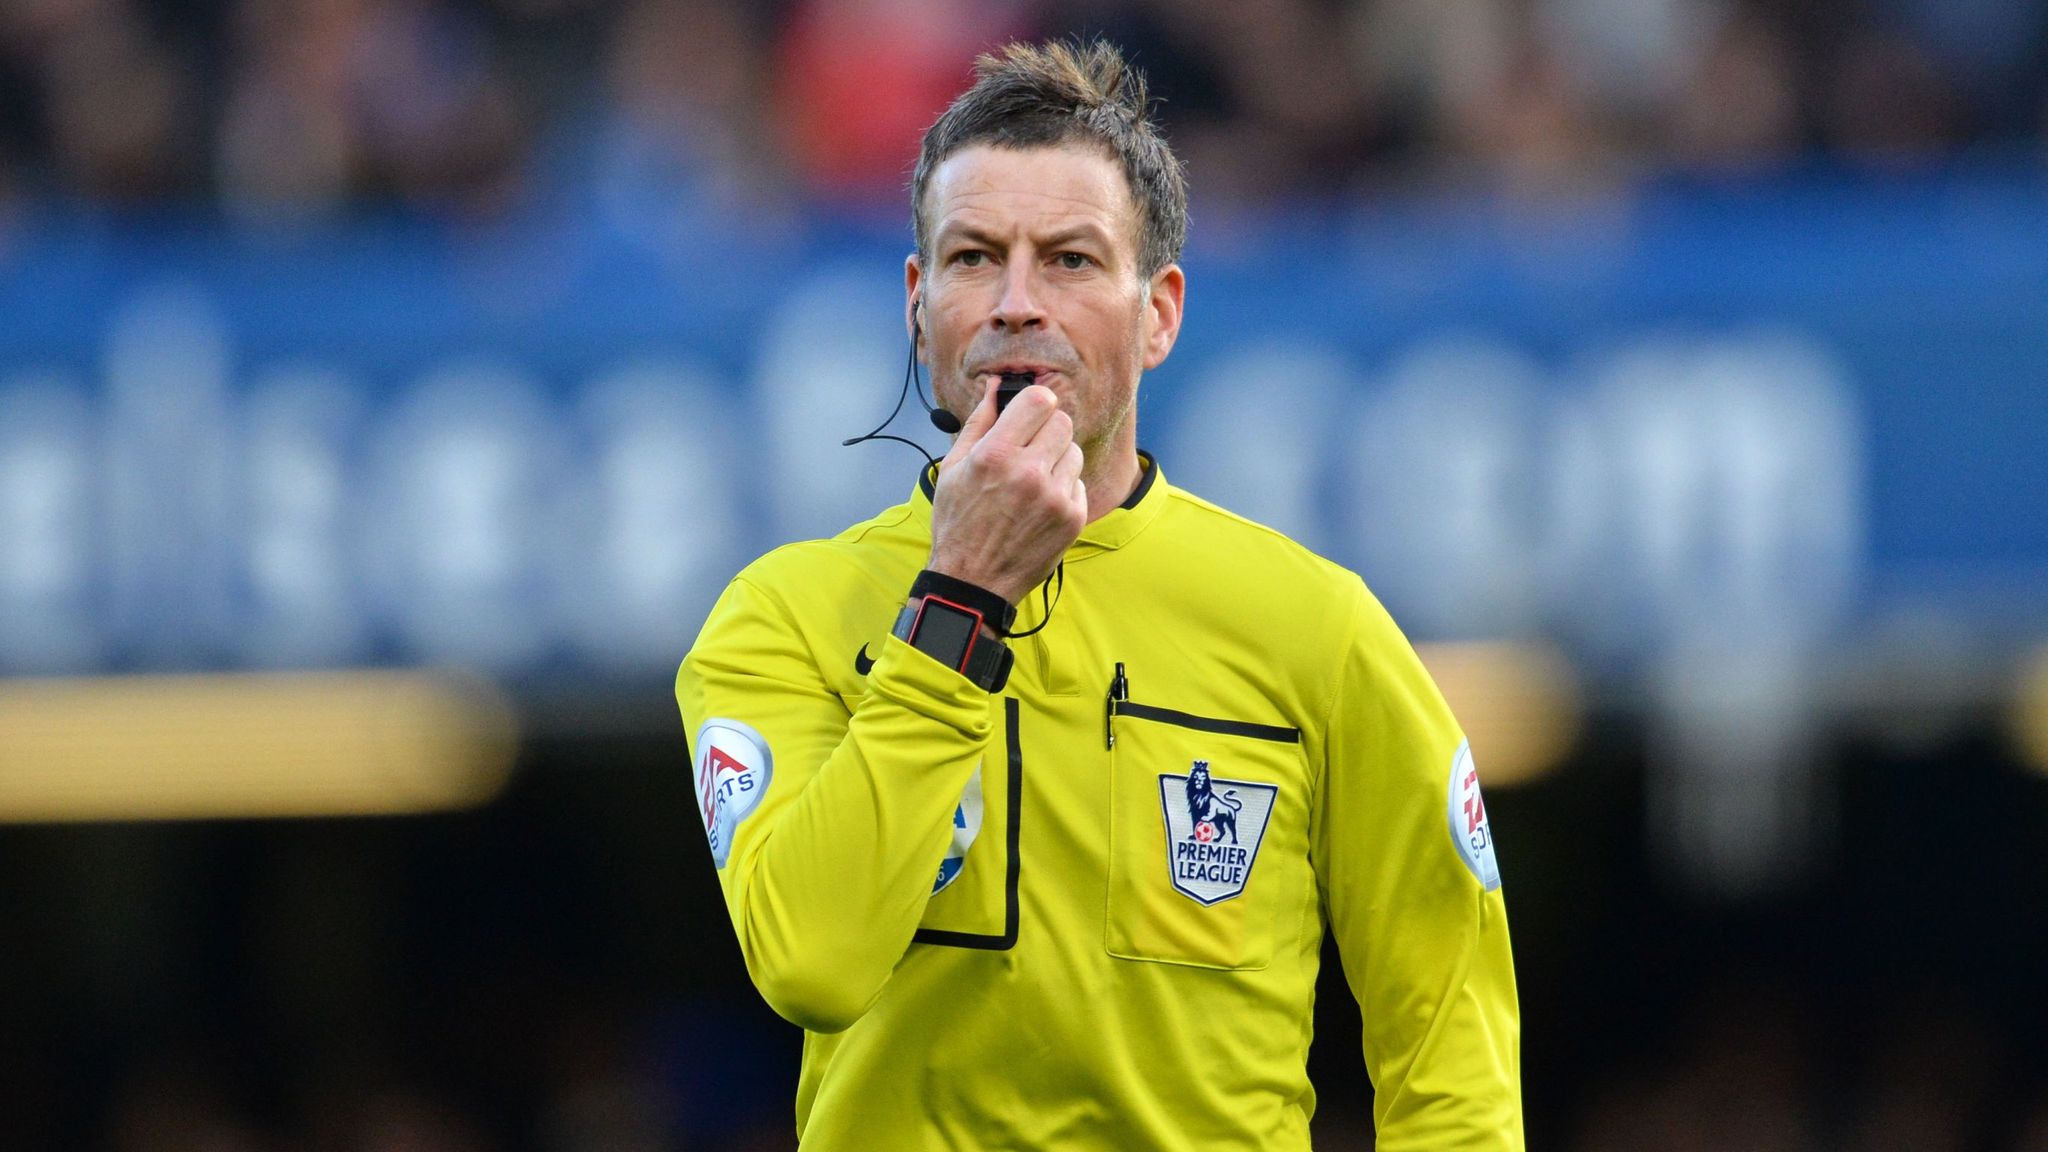 داور / انگلیس / لیگ برتر / Premier League / Referee / England